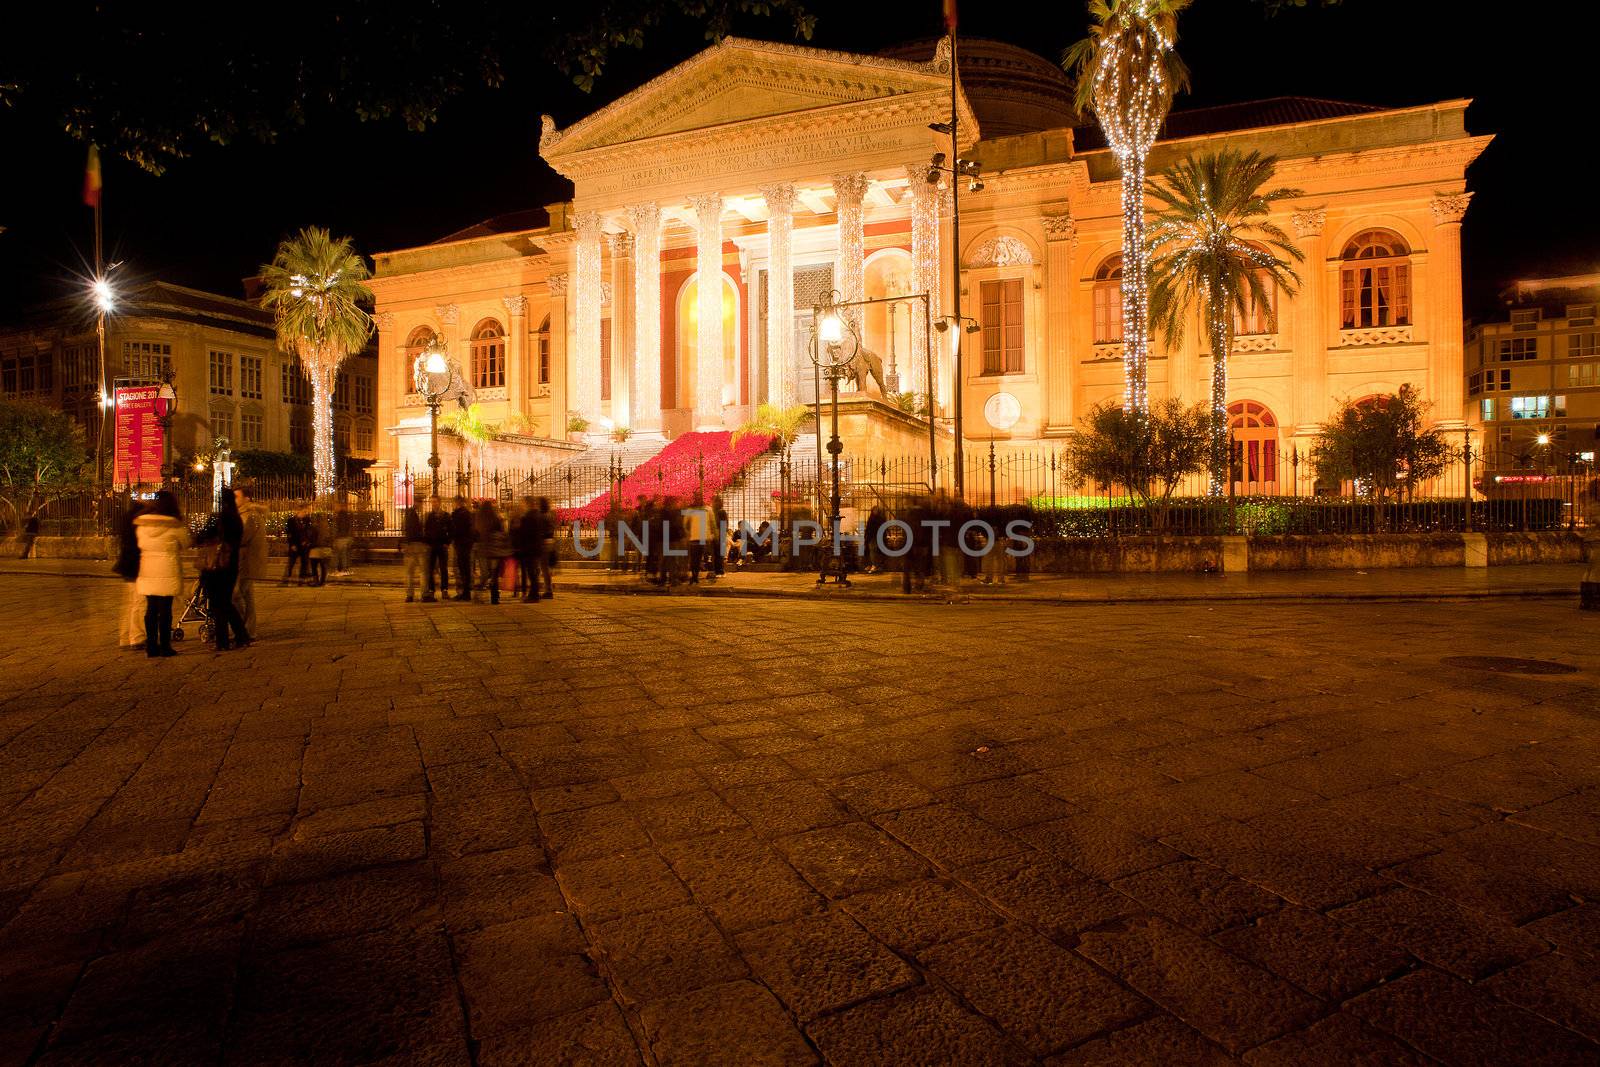 Teatro Massimo, opera house in Palermo - Italy